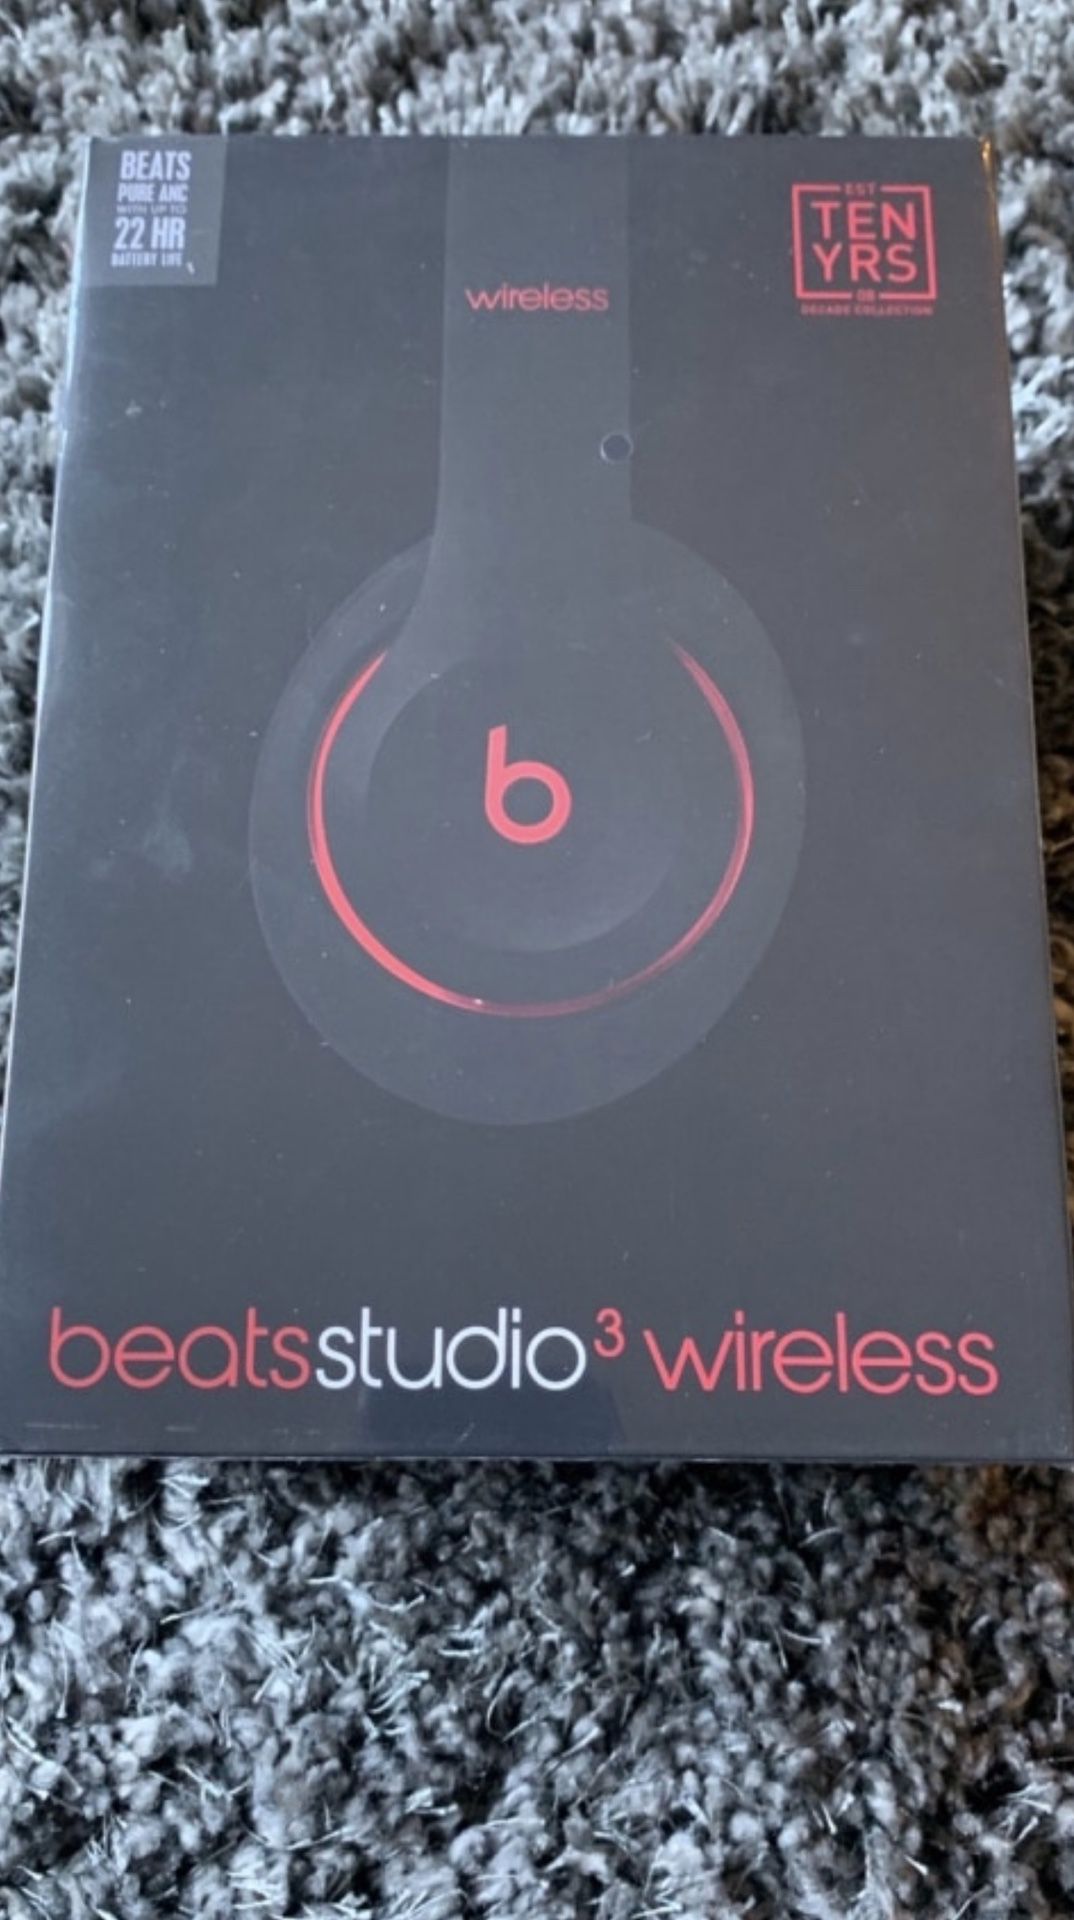 Beats studio wireless brand new